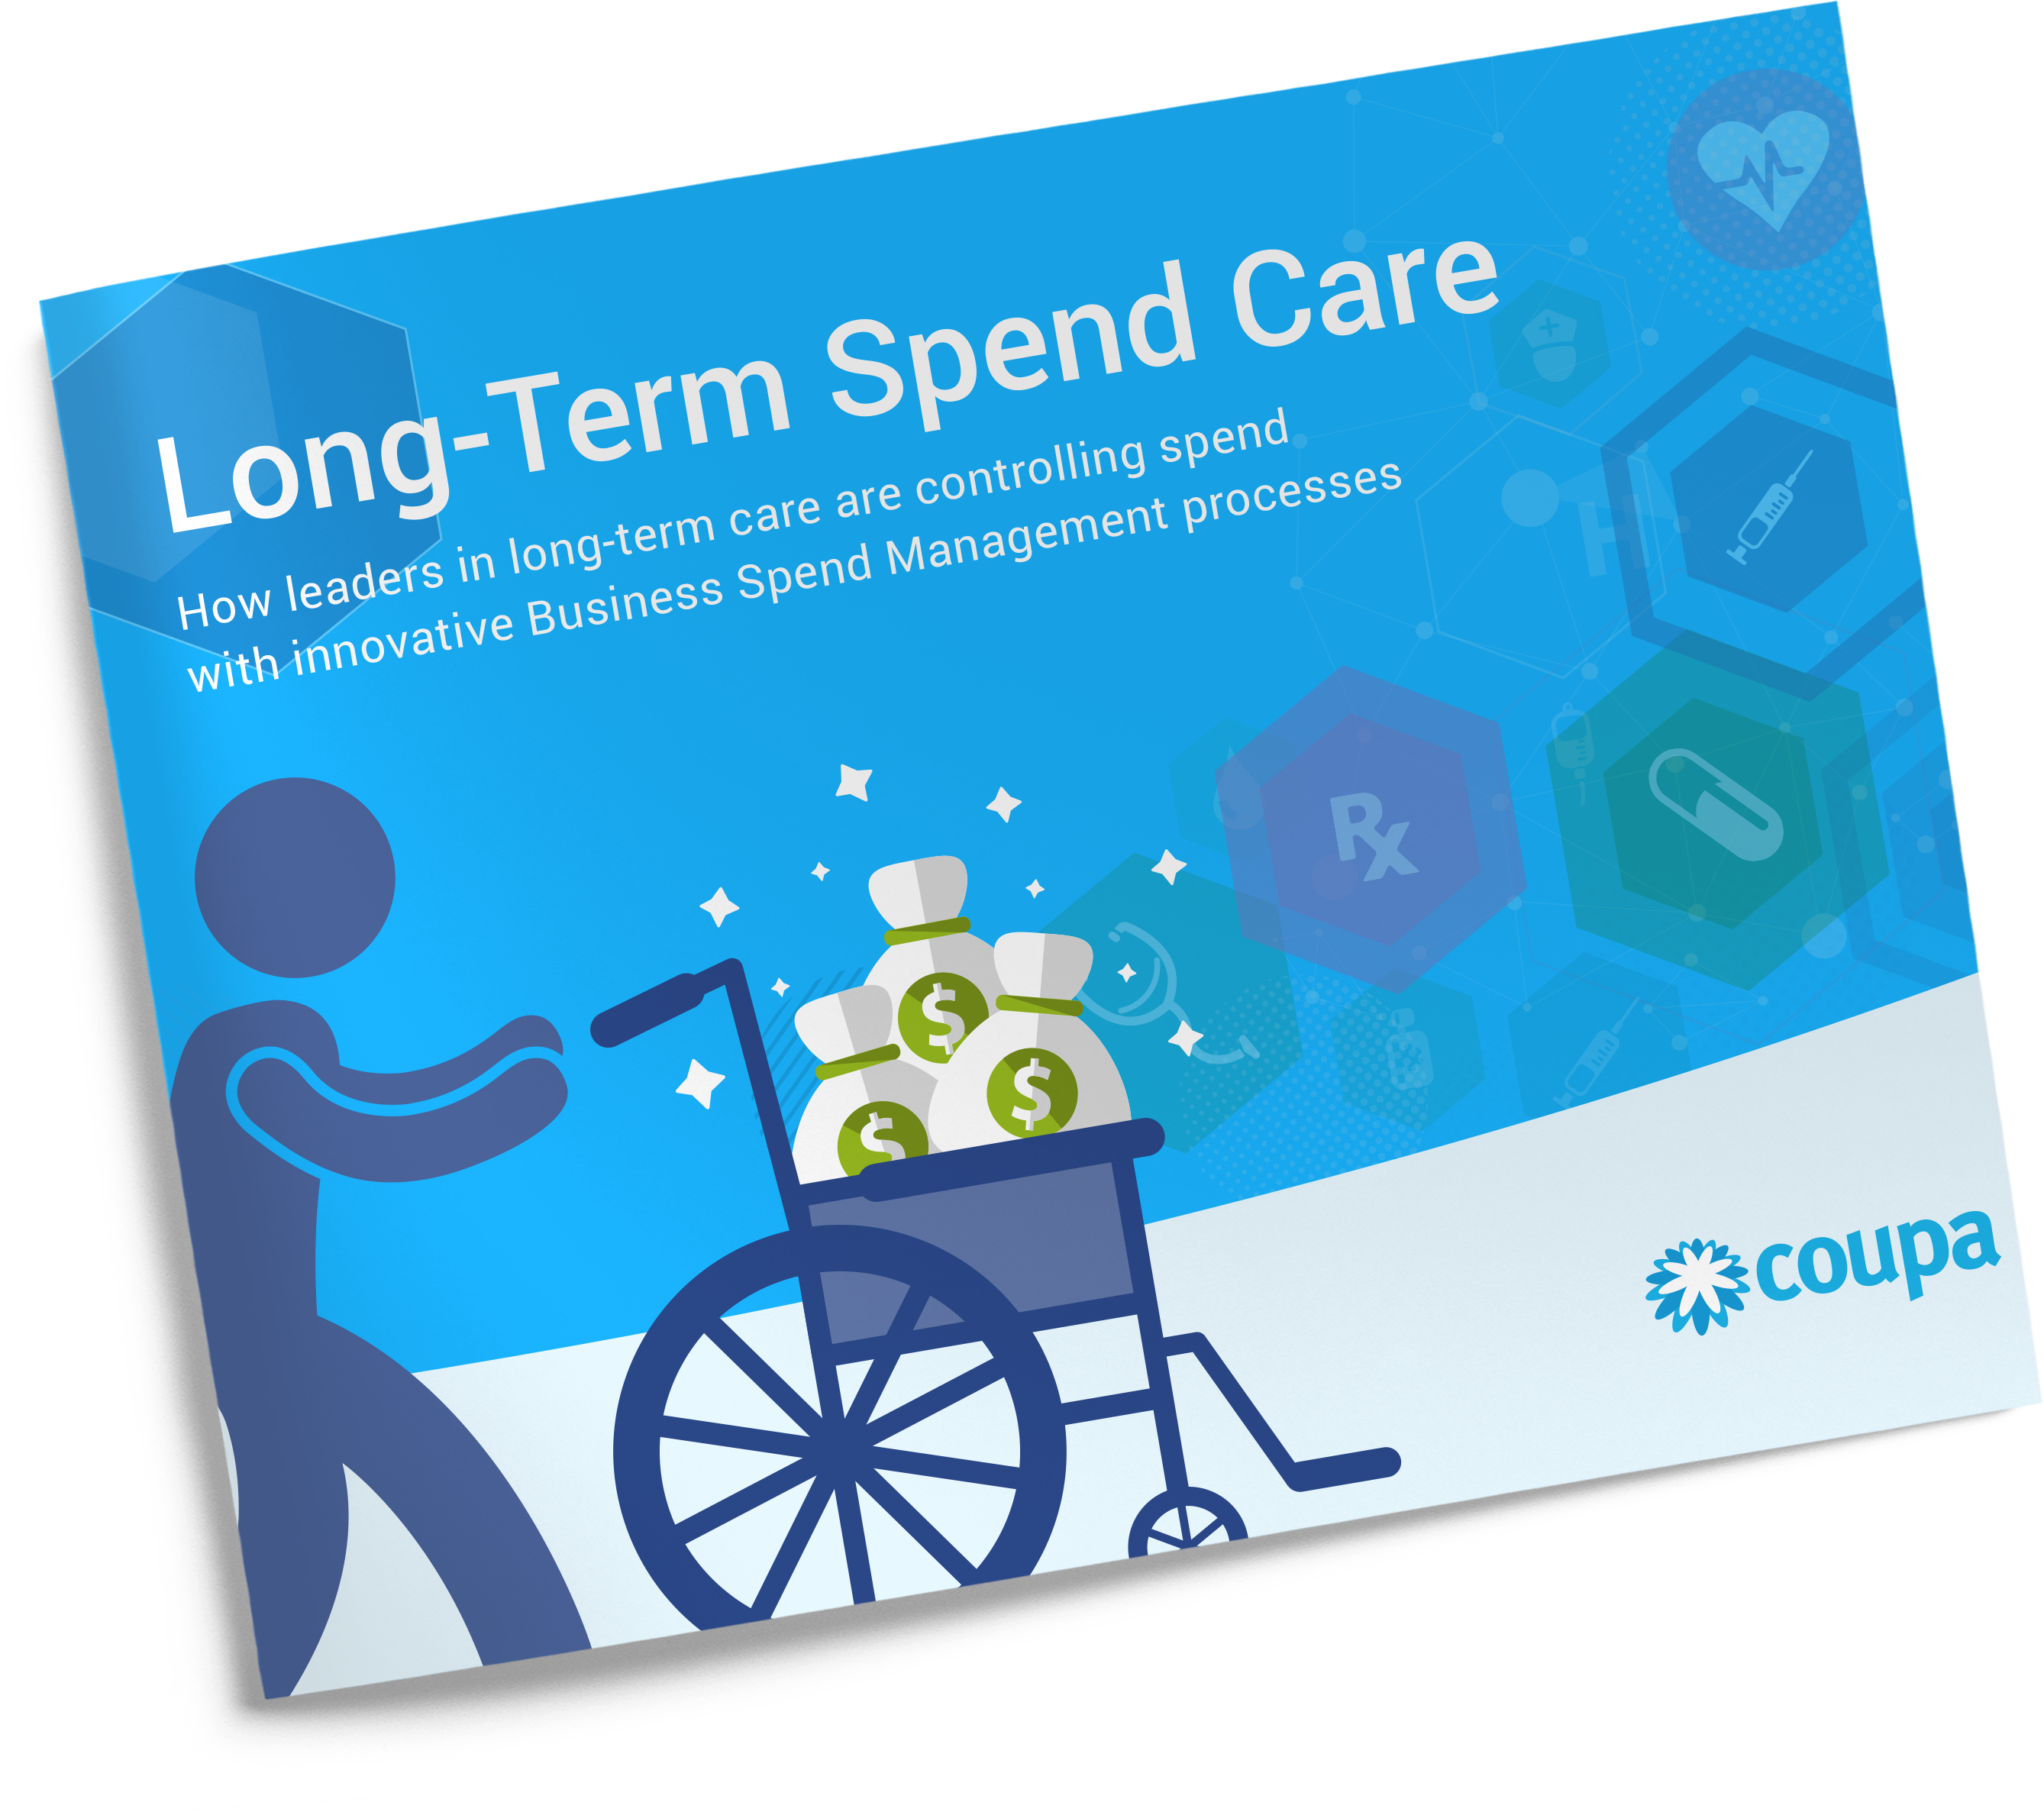 Long-Term Spend Care